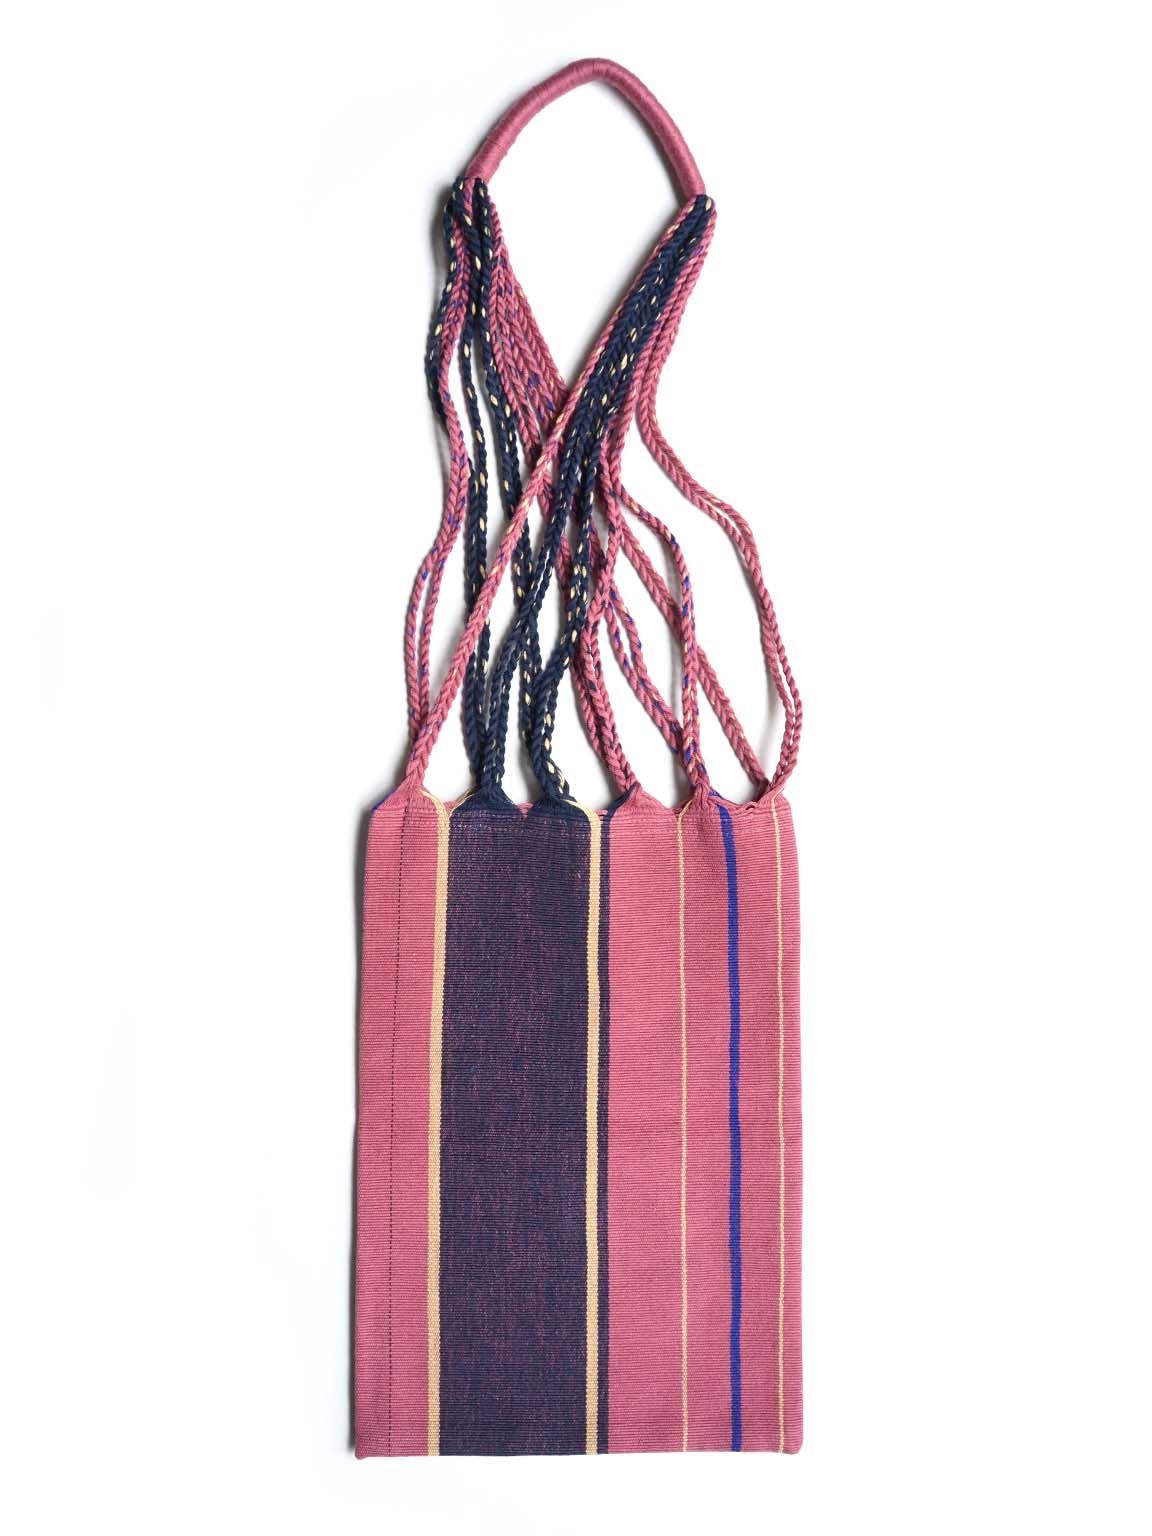 pips / mini hammock bag "PINK"